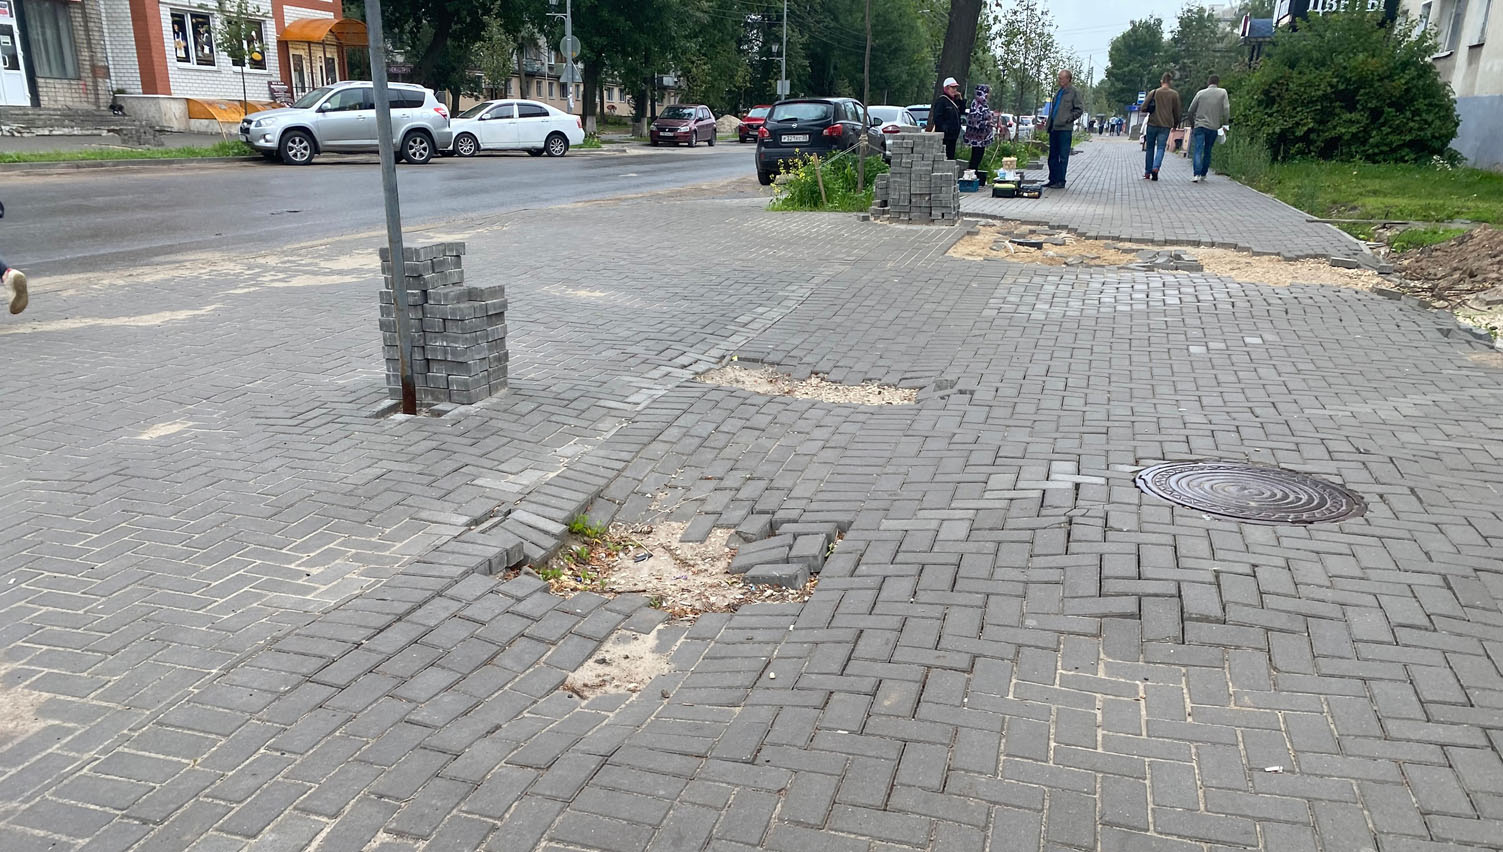 Прокуратура в Муроме проверит развалившуюся новую плитку на тротуарах